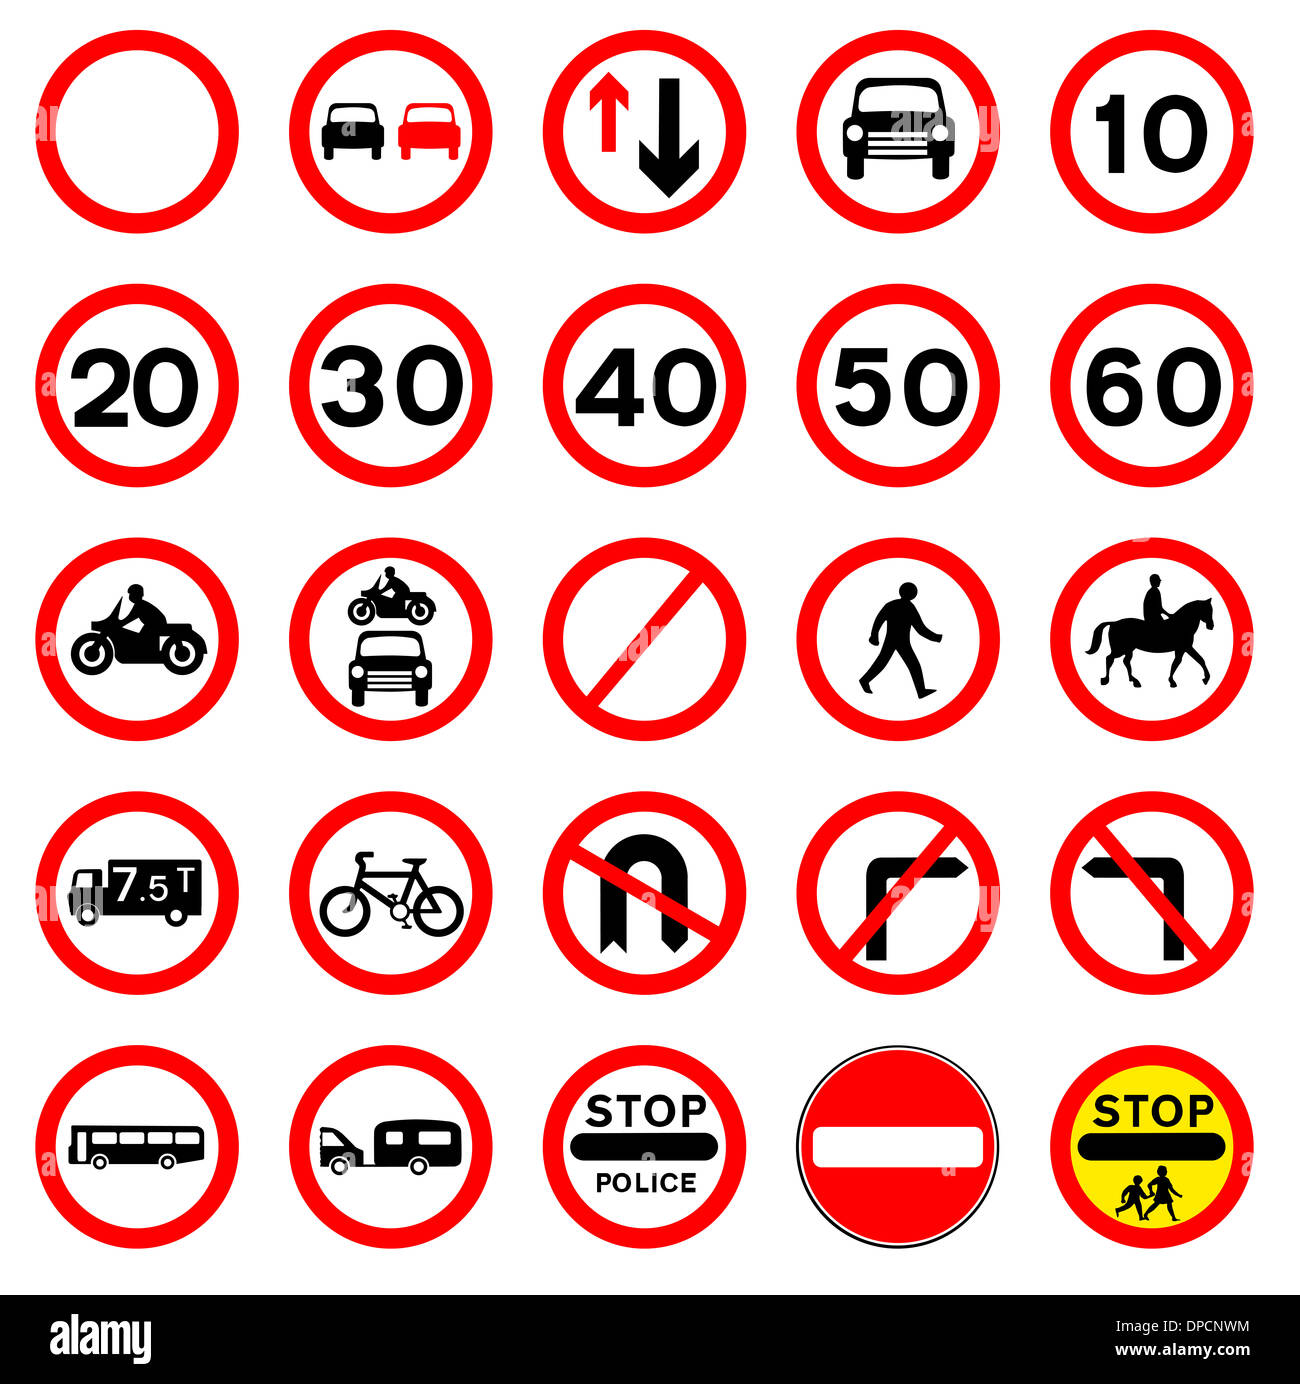 Road traffic signs